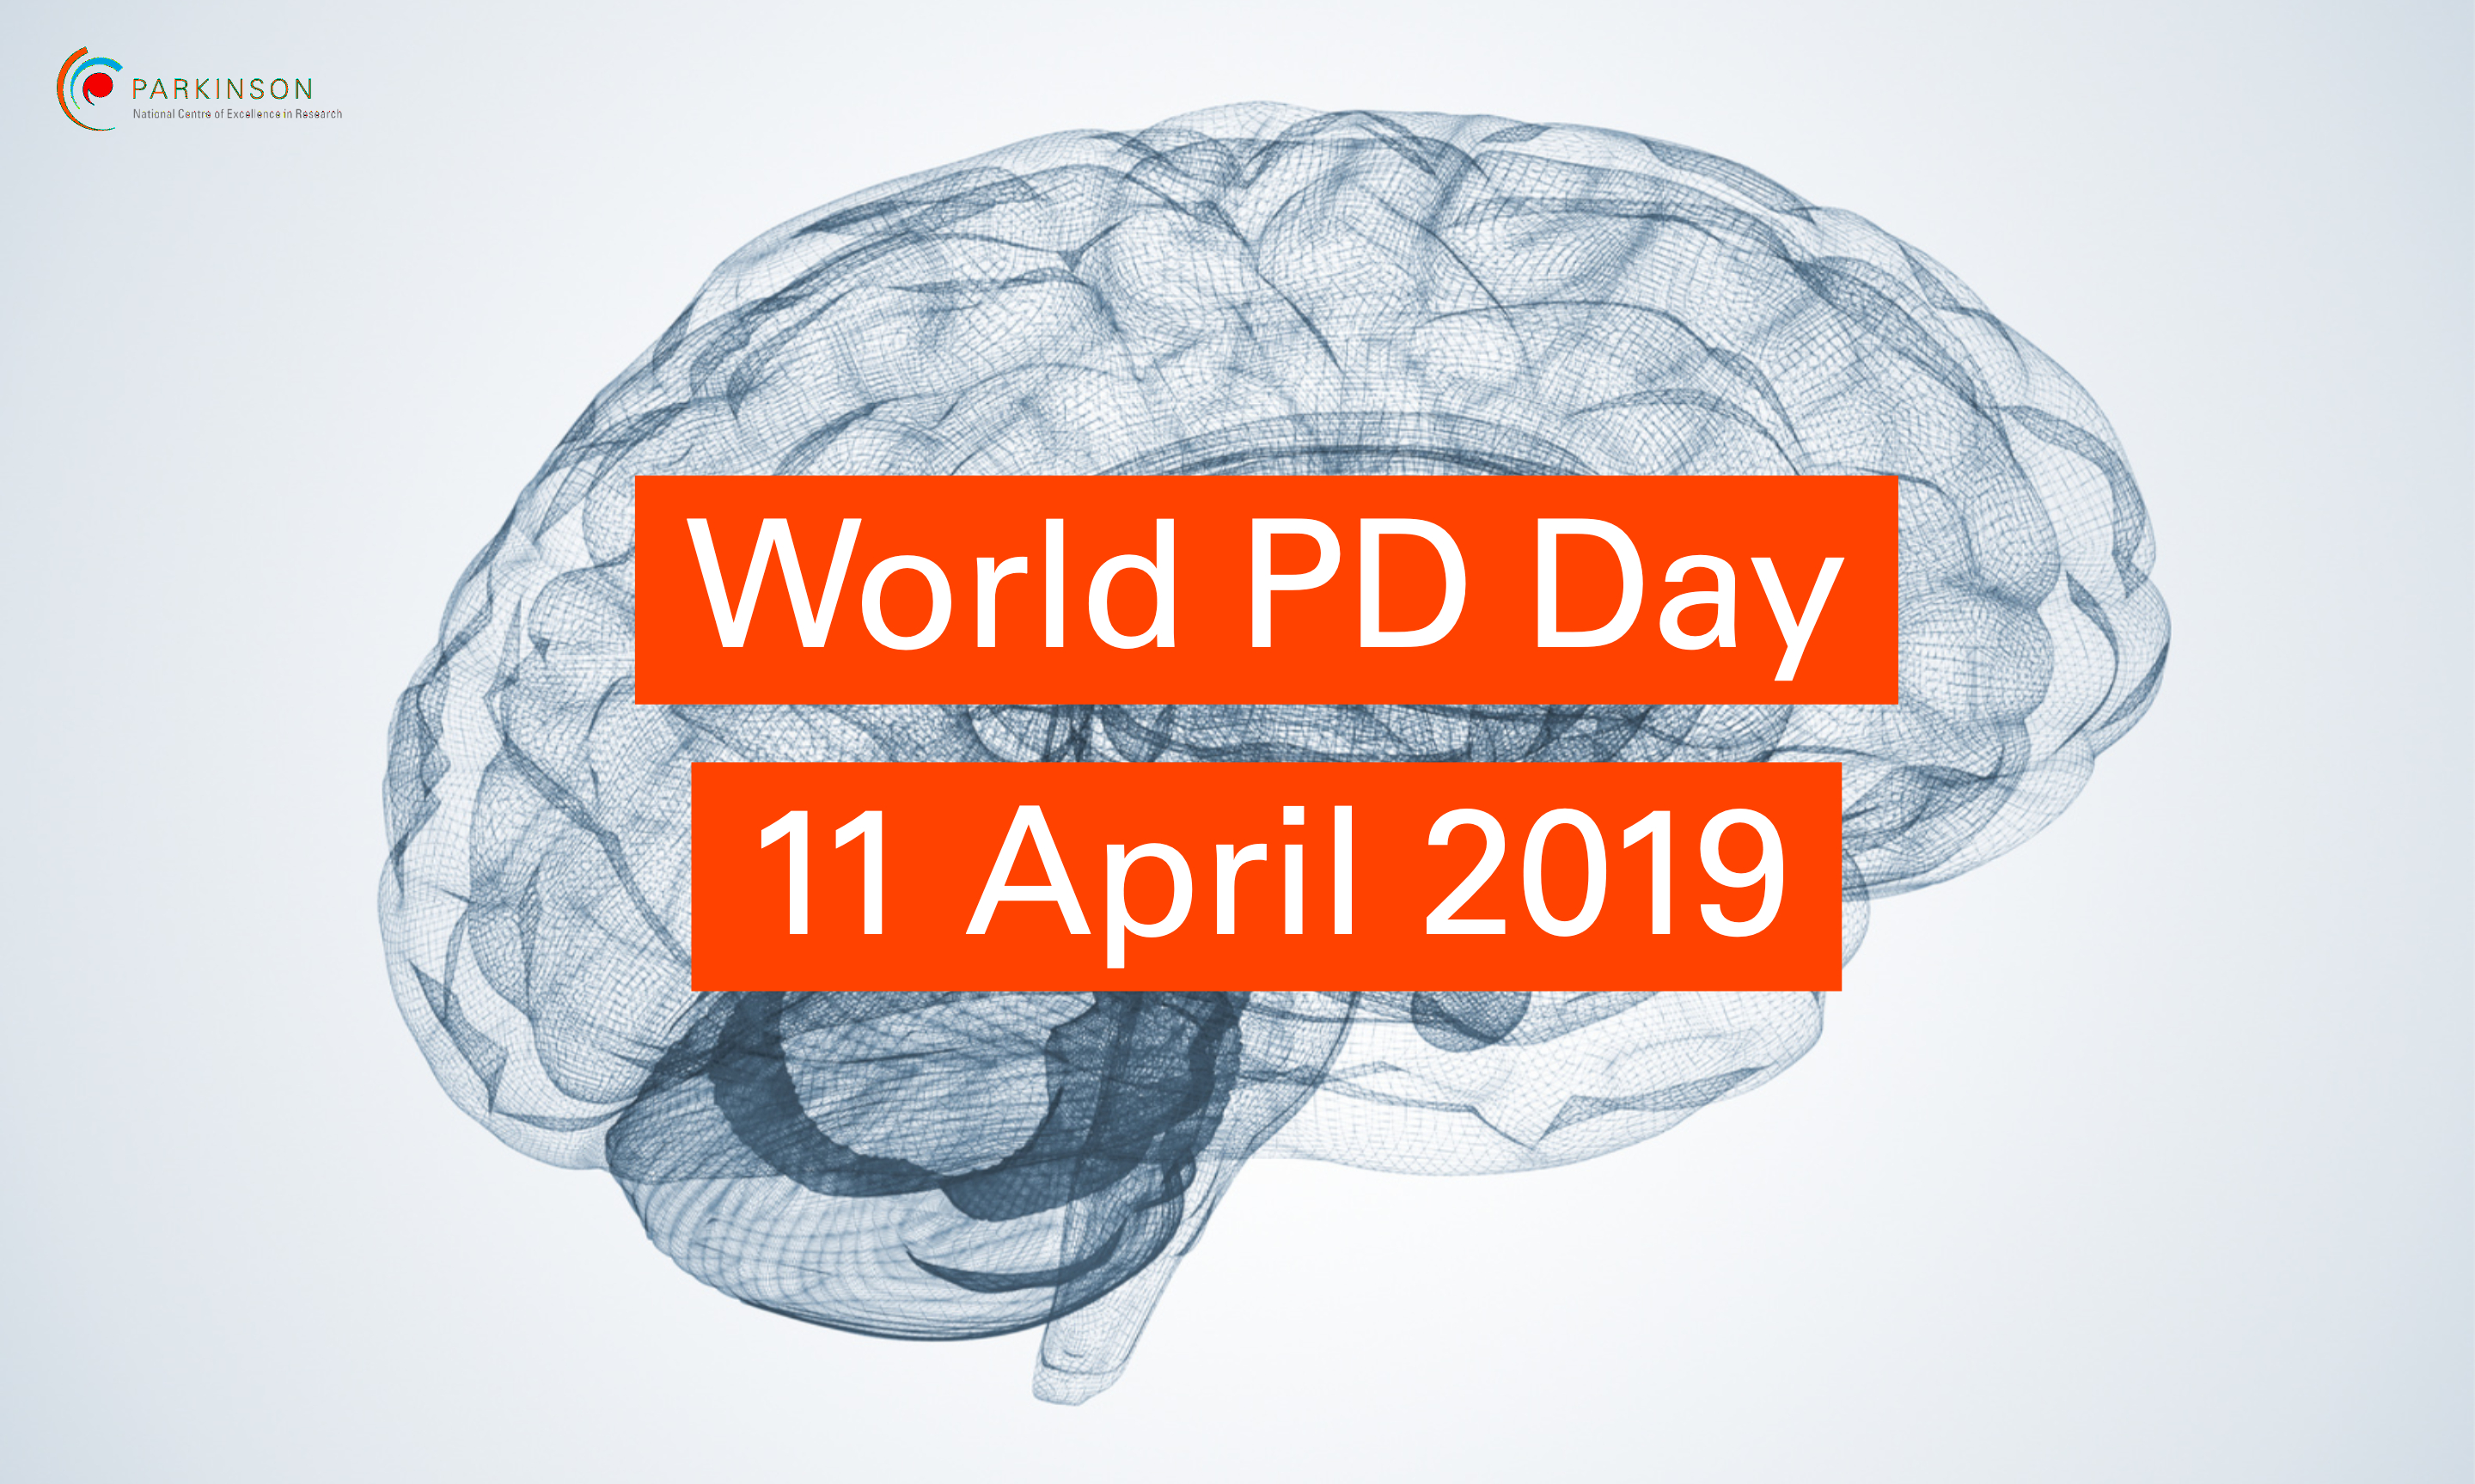 World PD Day